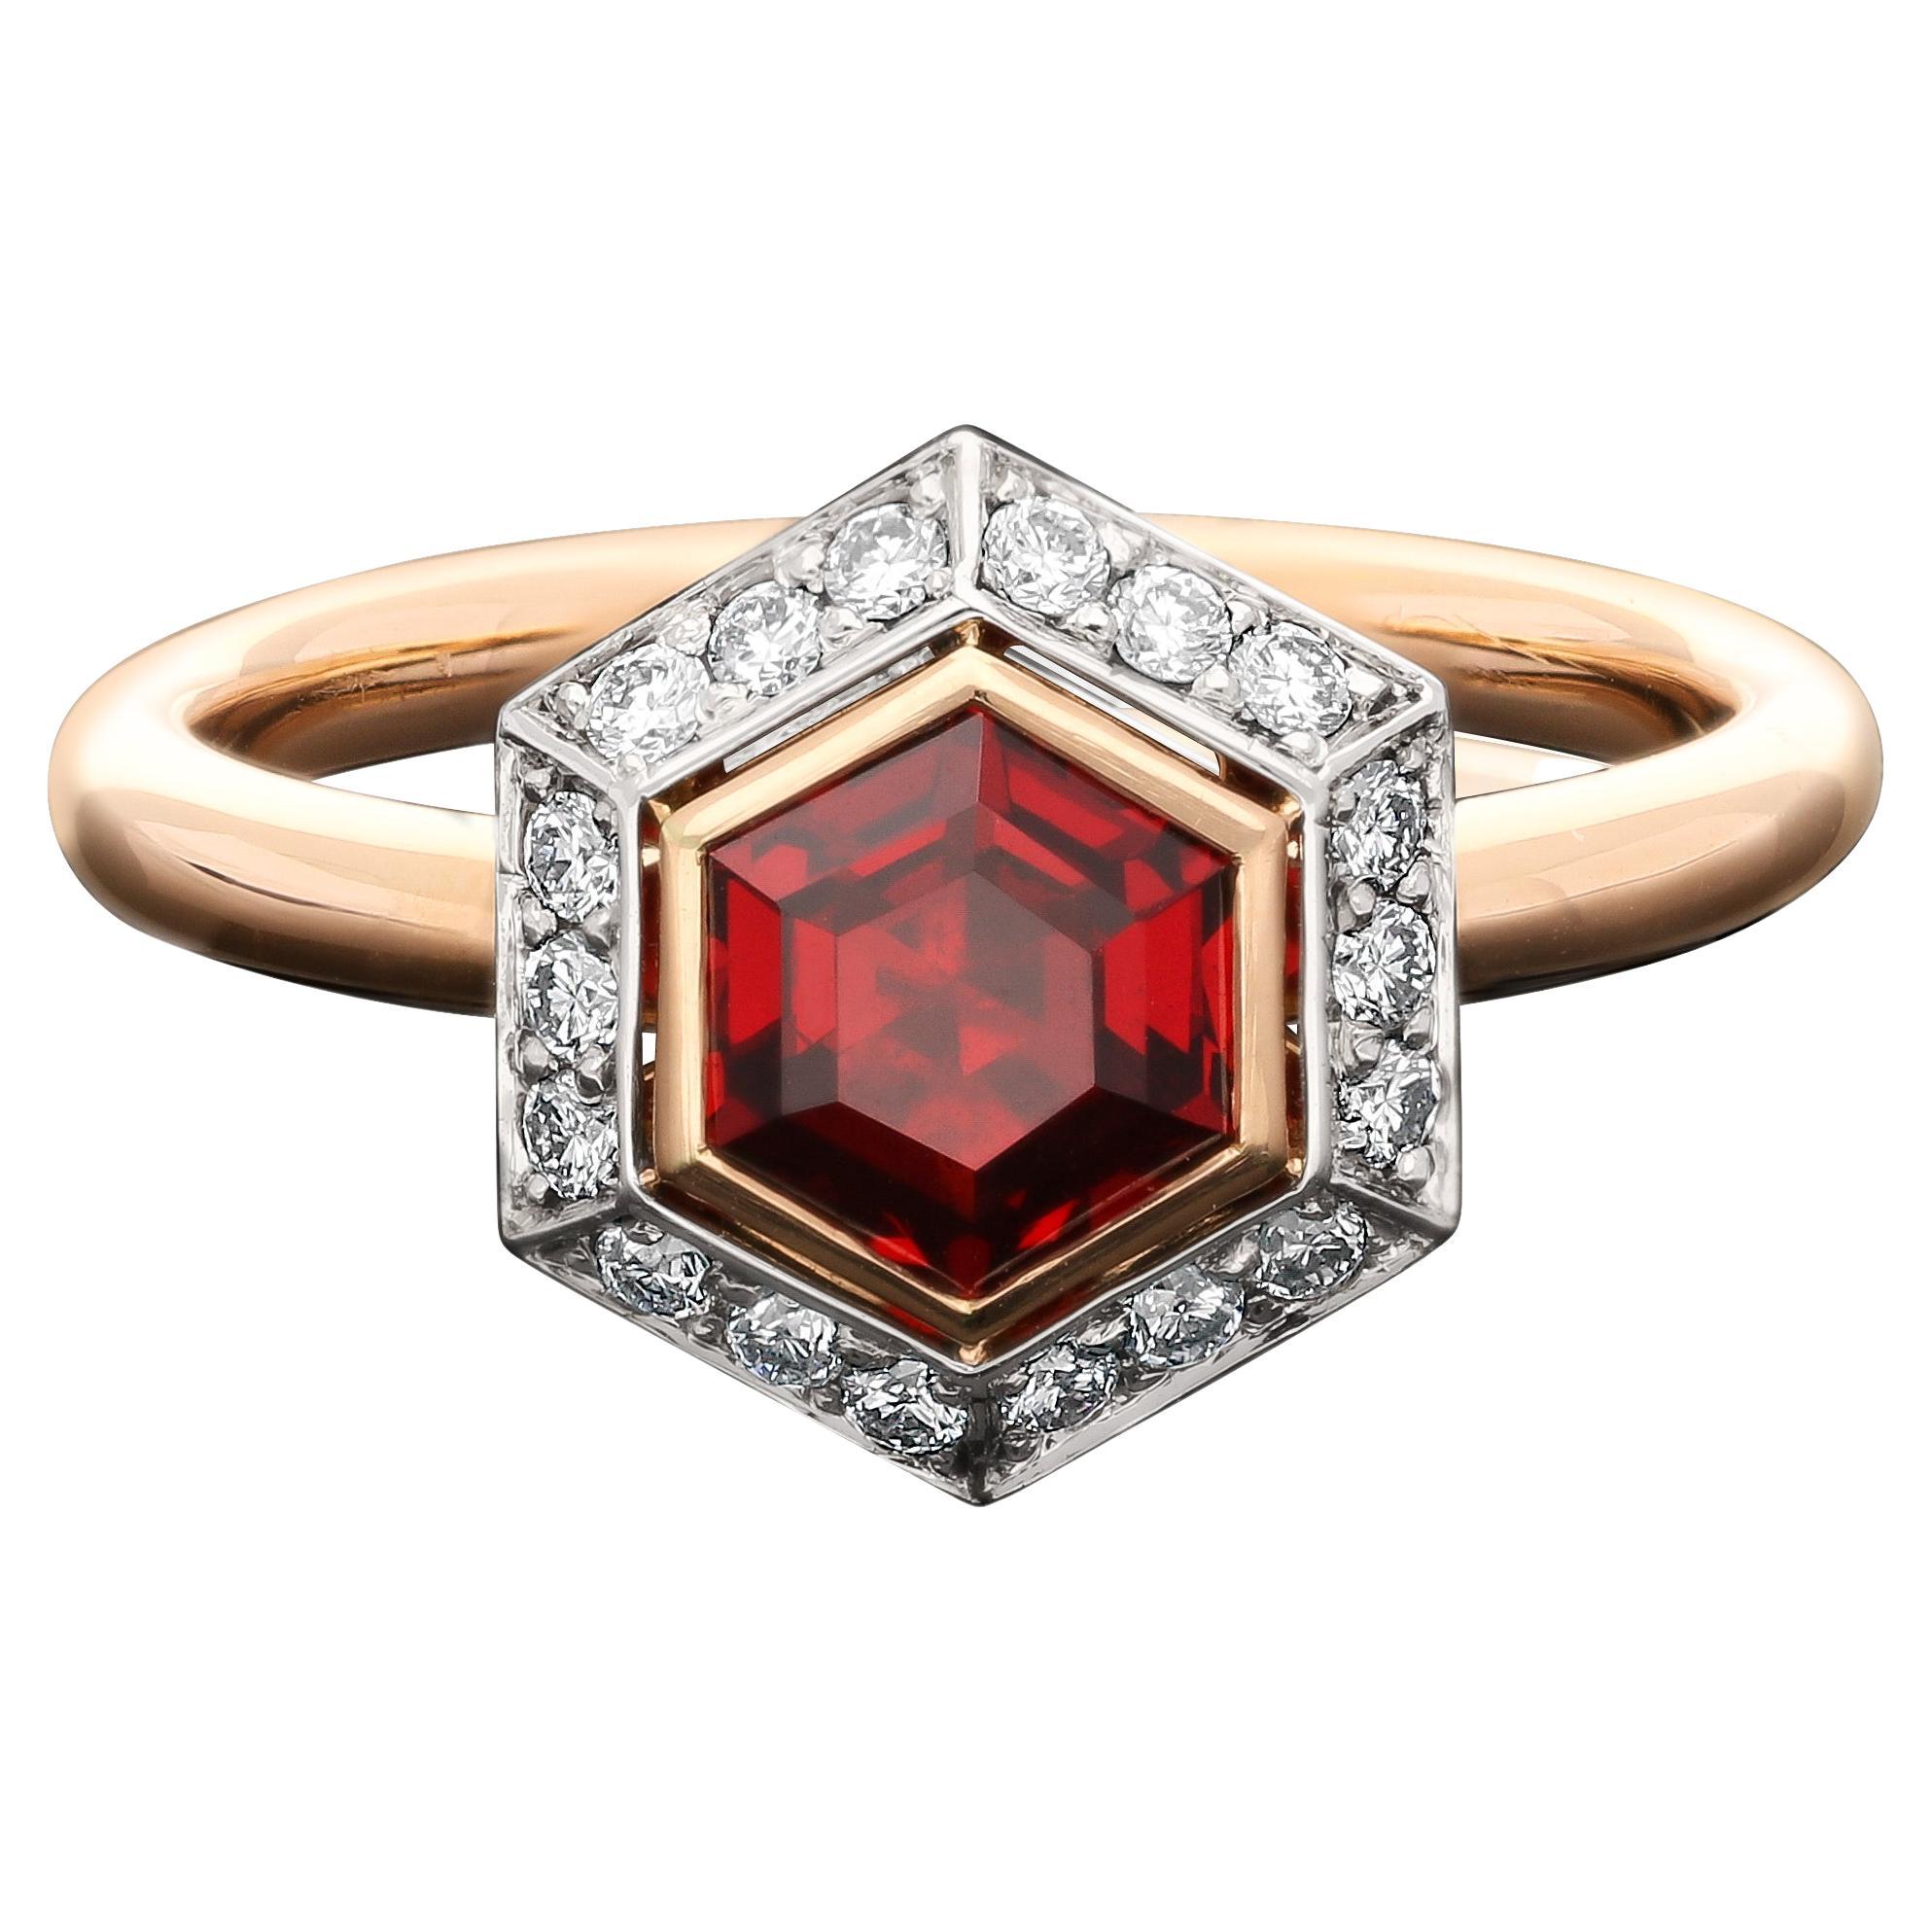 Hancocks 0.92ct Vivid Red Burmese Spinel Ring with Diamond Surround Rose Gold